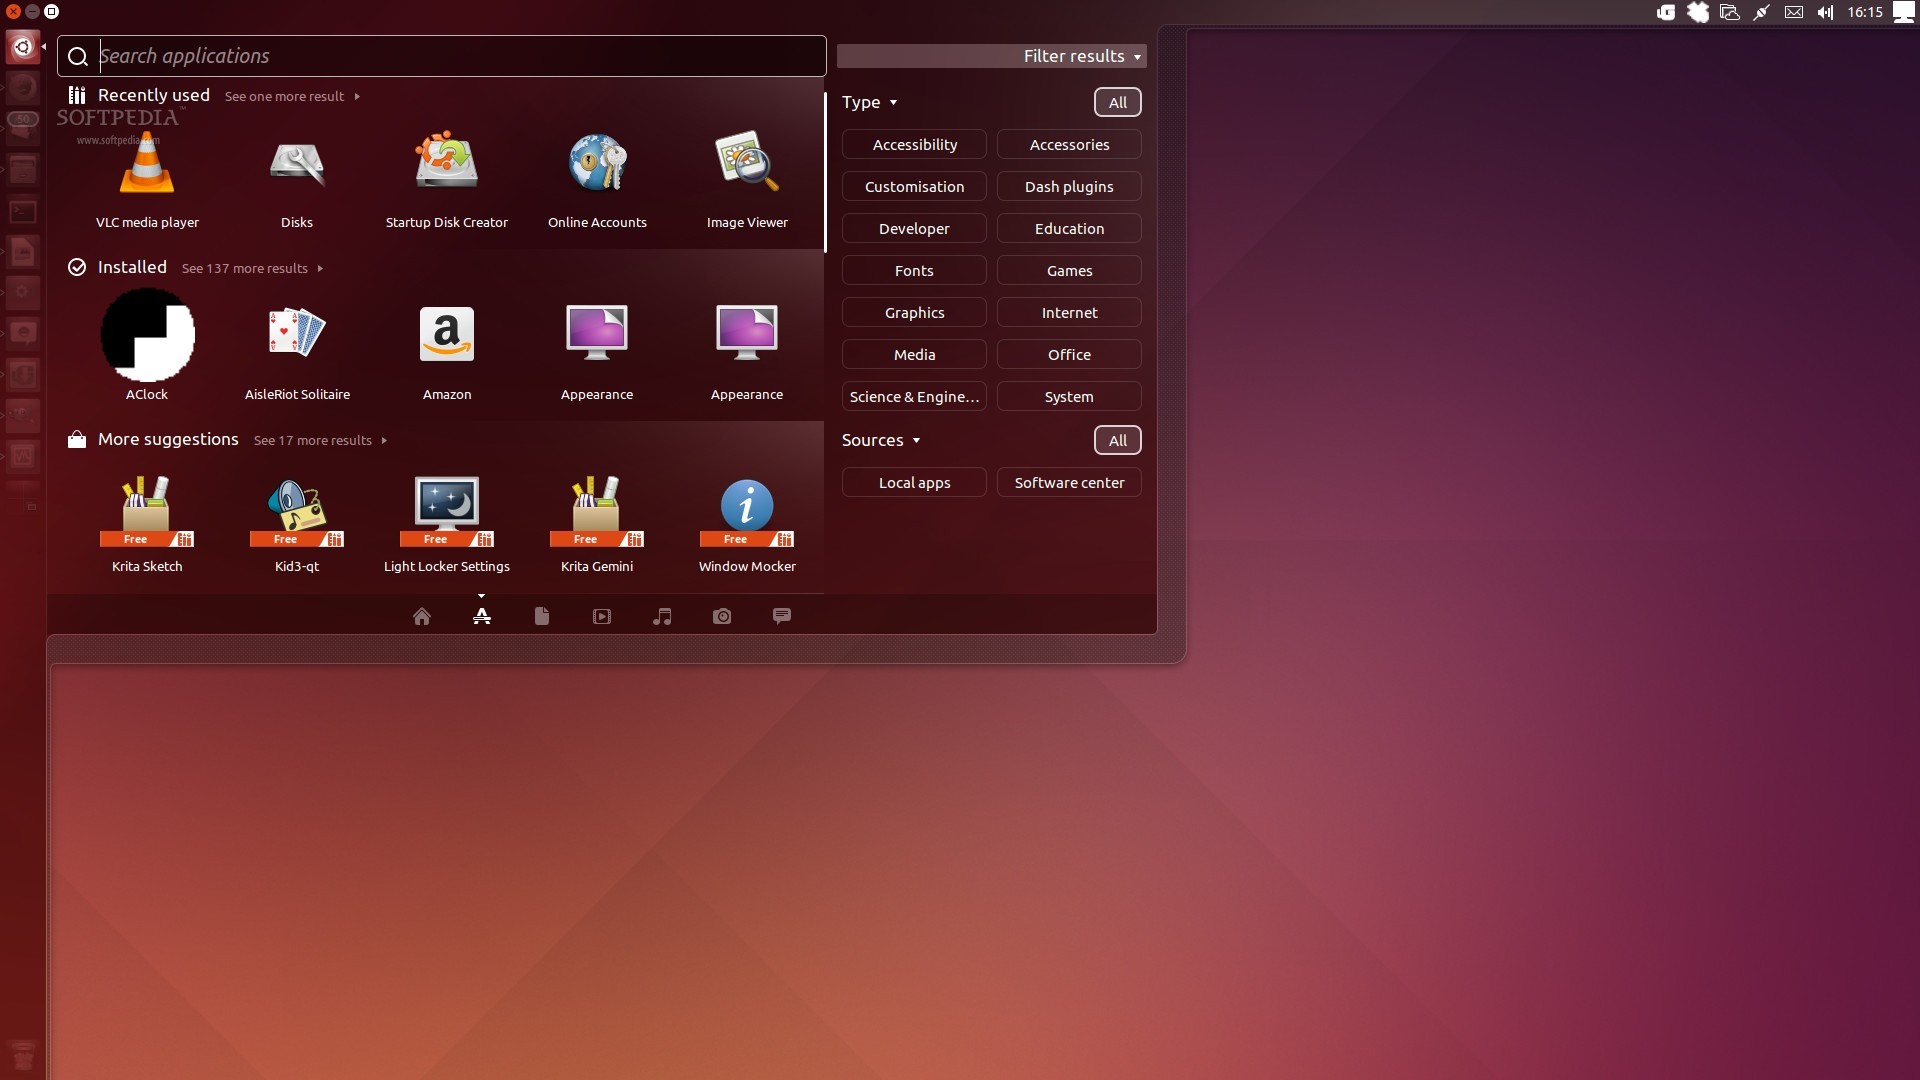 Ubuntu 6350-1: Linux kernel vulnerabilities